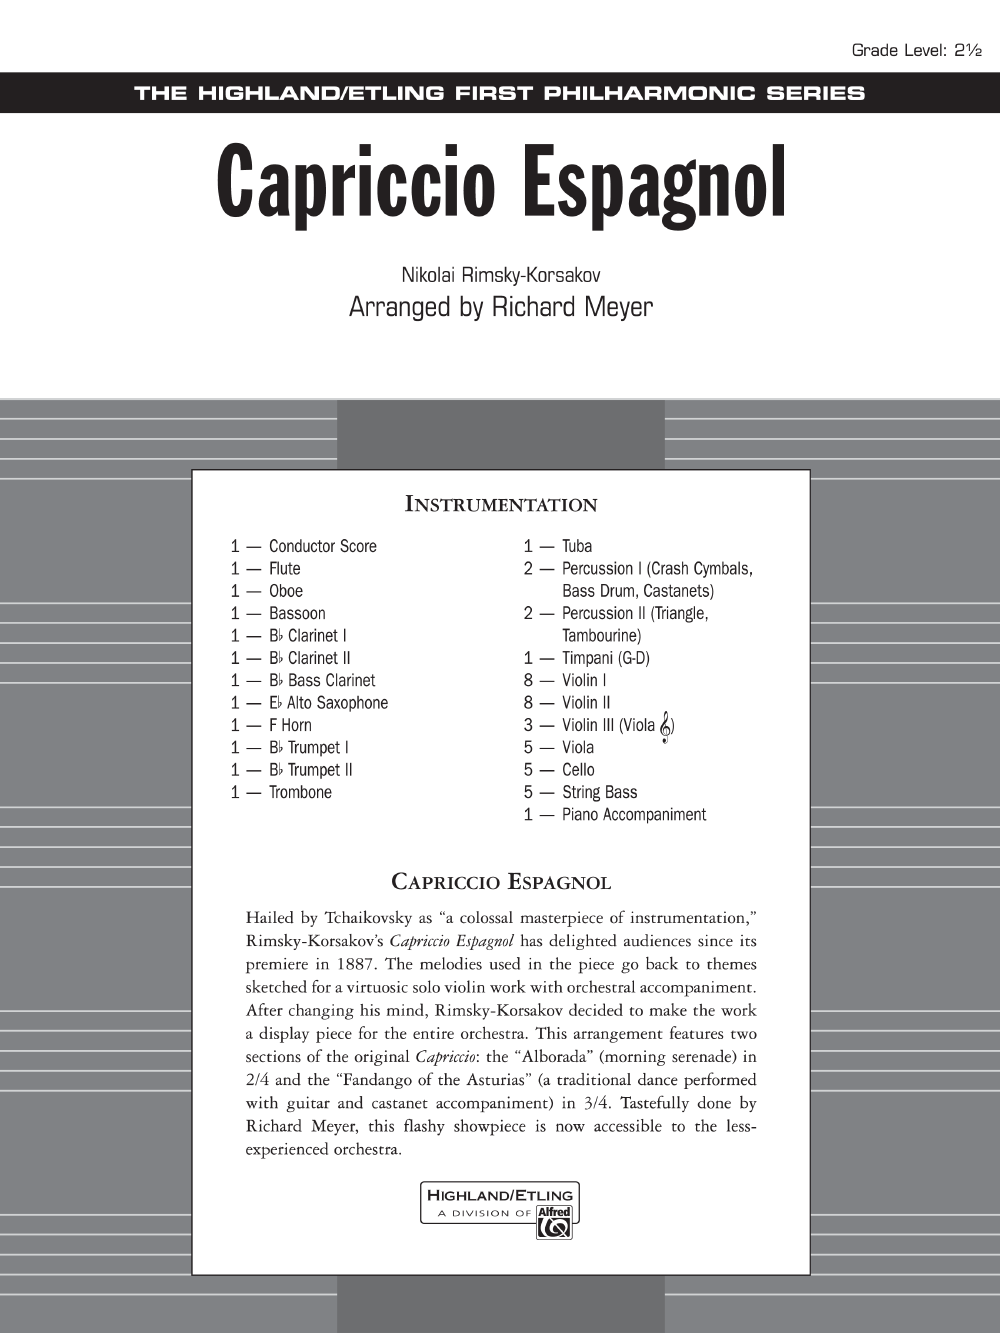 CAPRICCIO ESPAGNOL